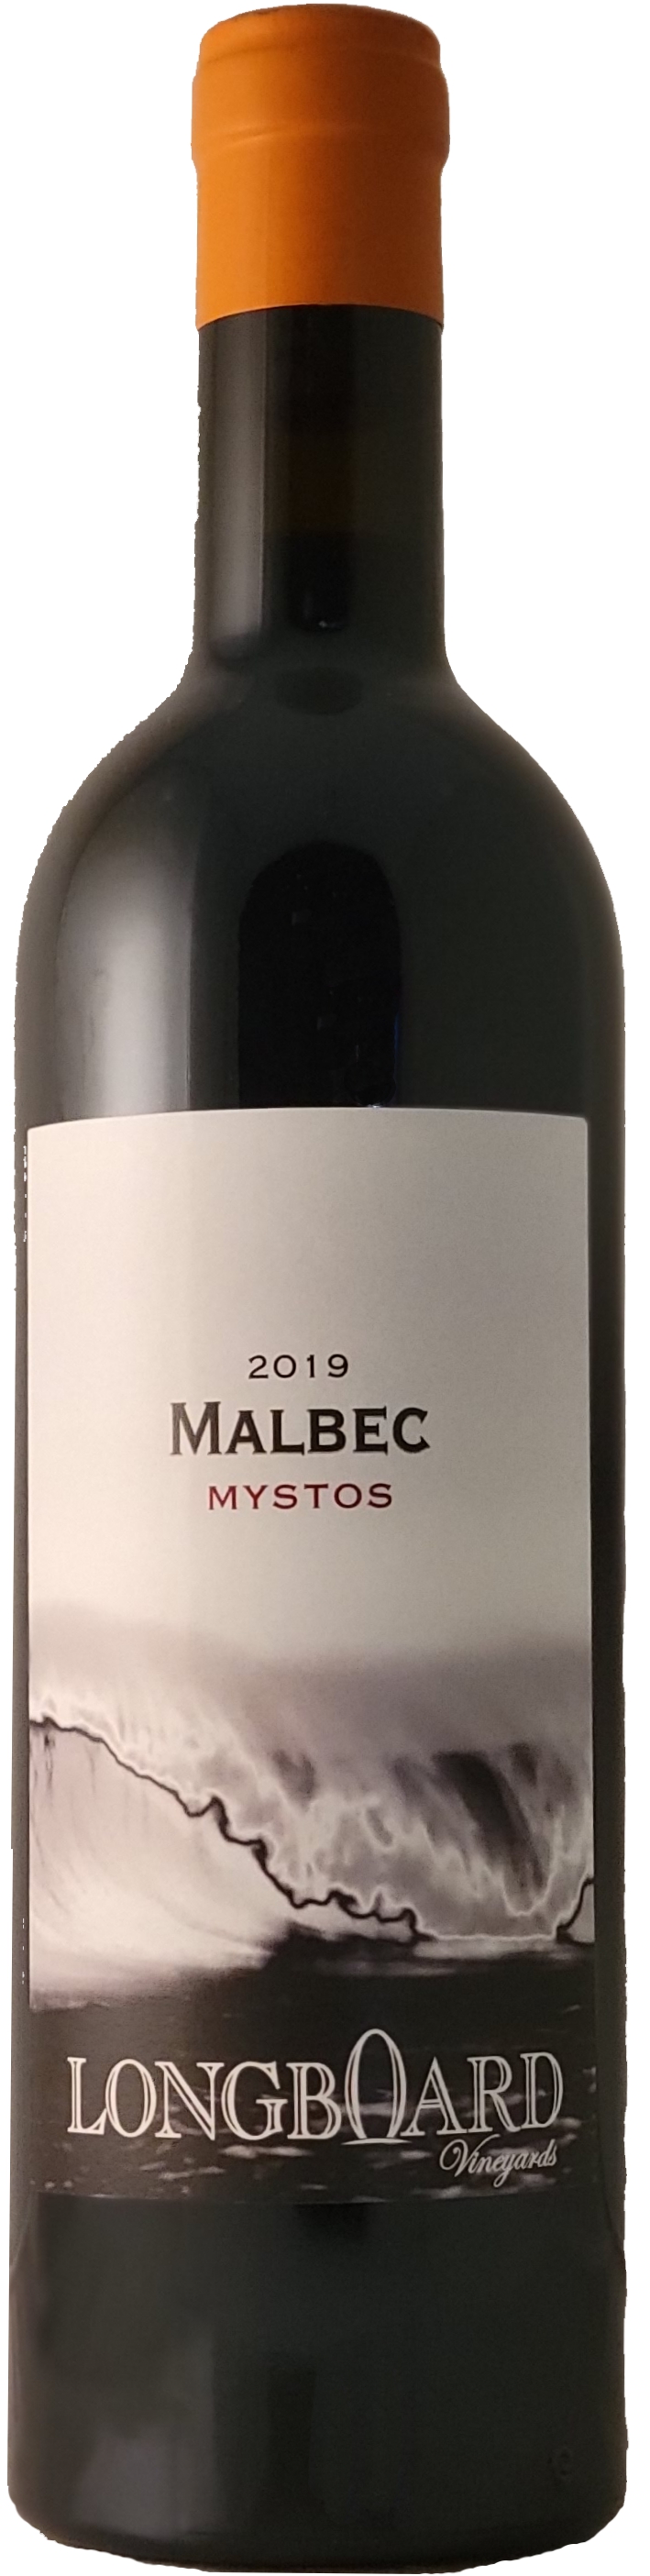 2019 Malbec Mystos